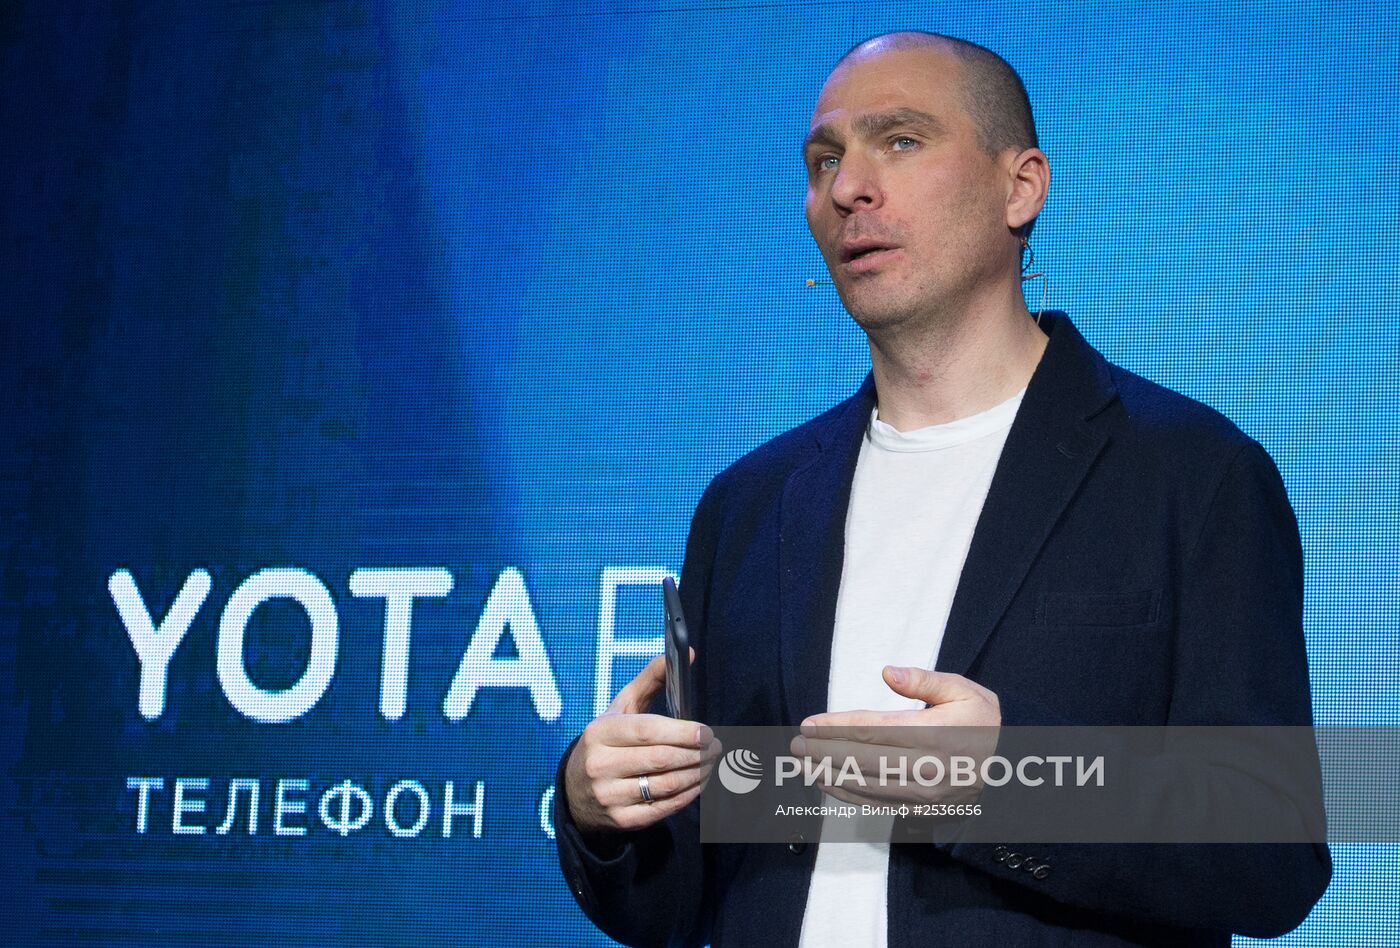 Презентация смартфона YotaPhone 2 в России